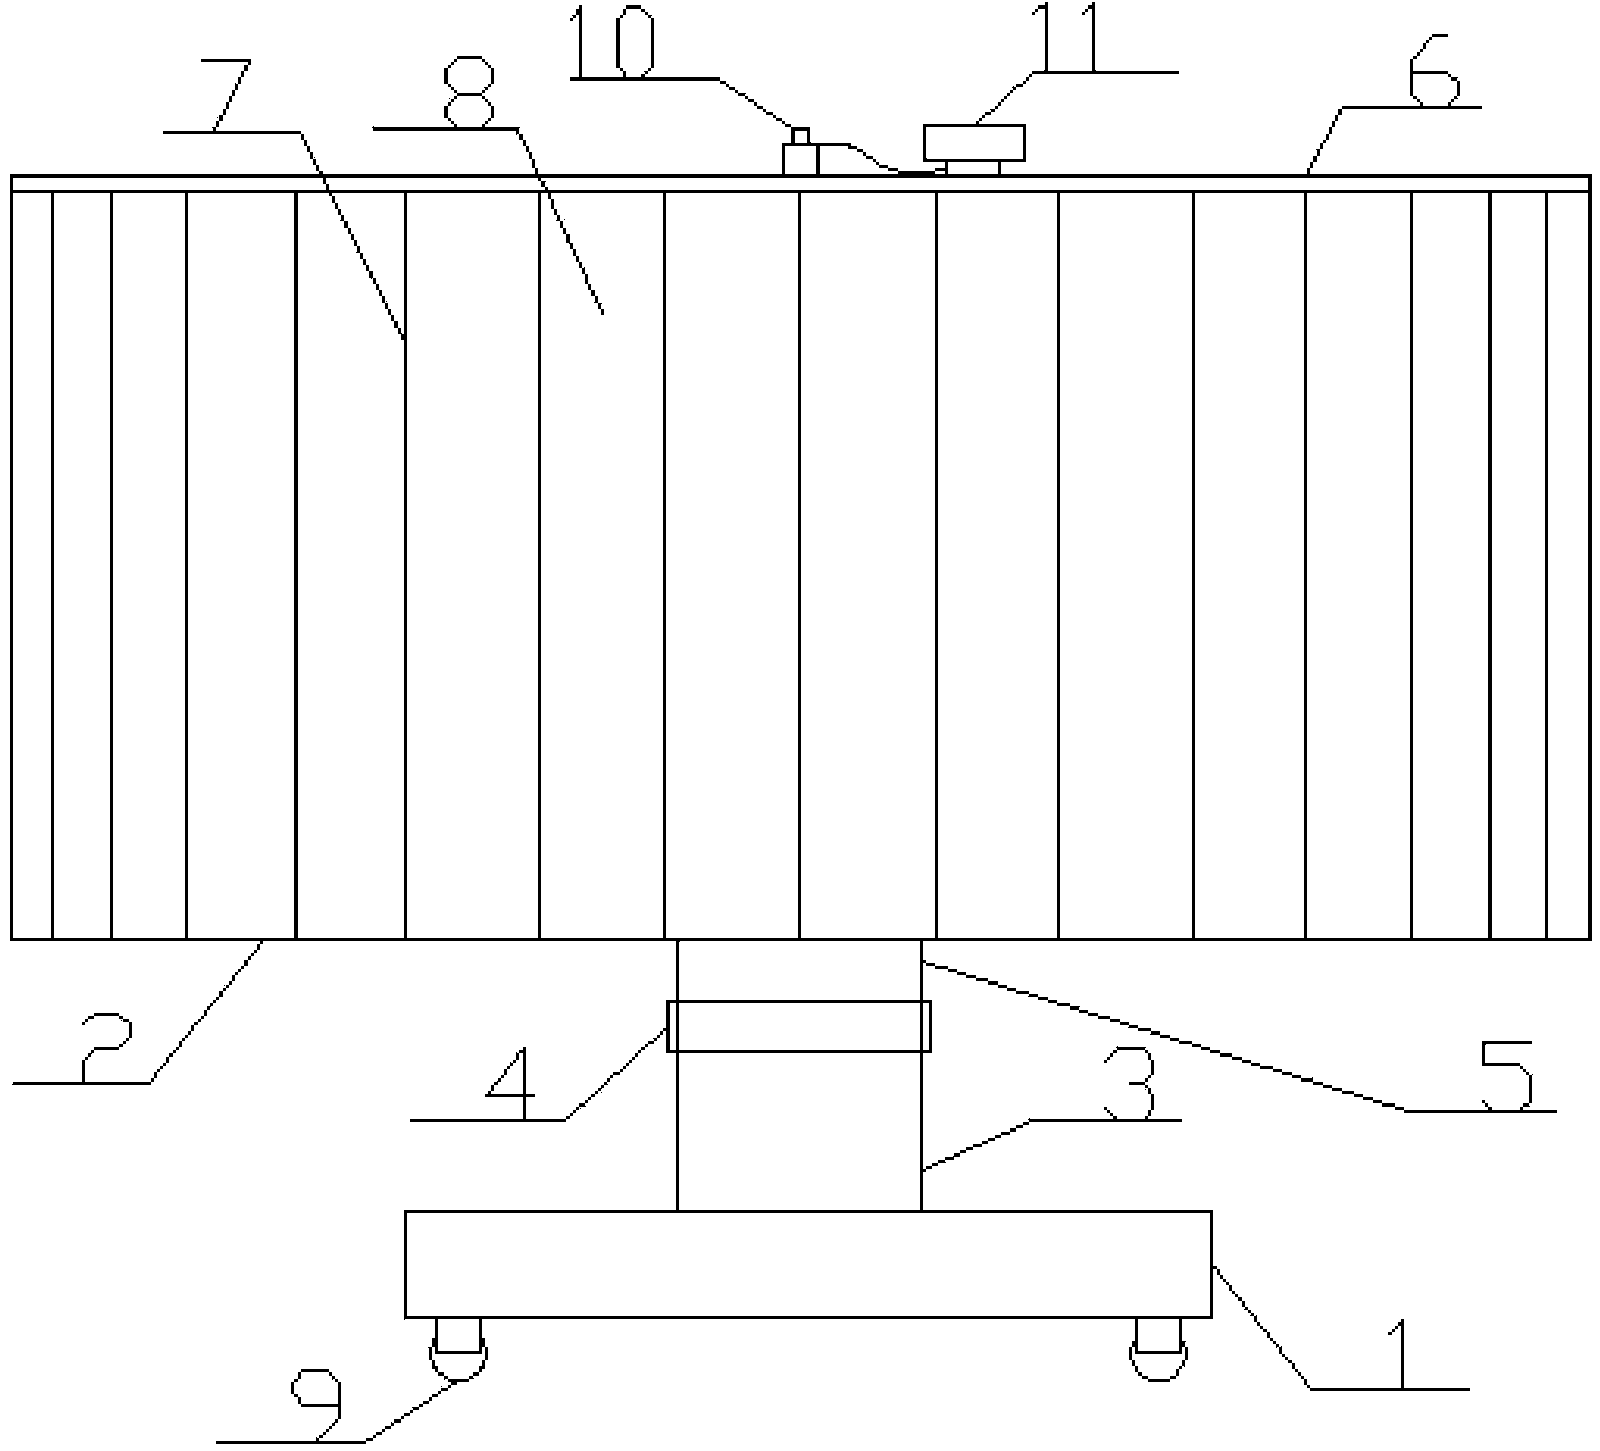 Printing template containing rack